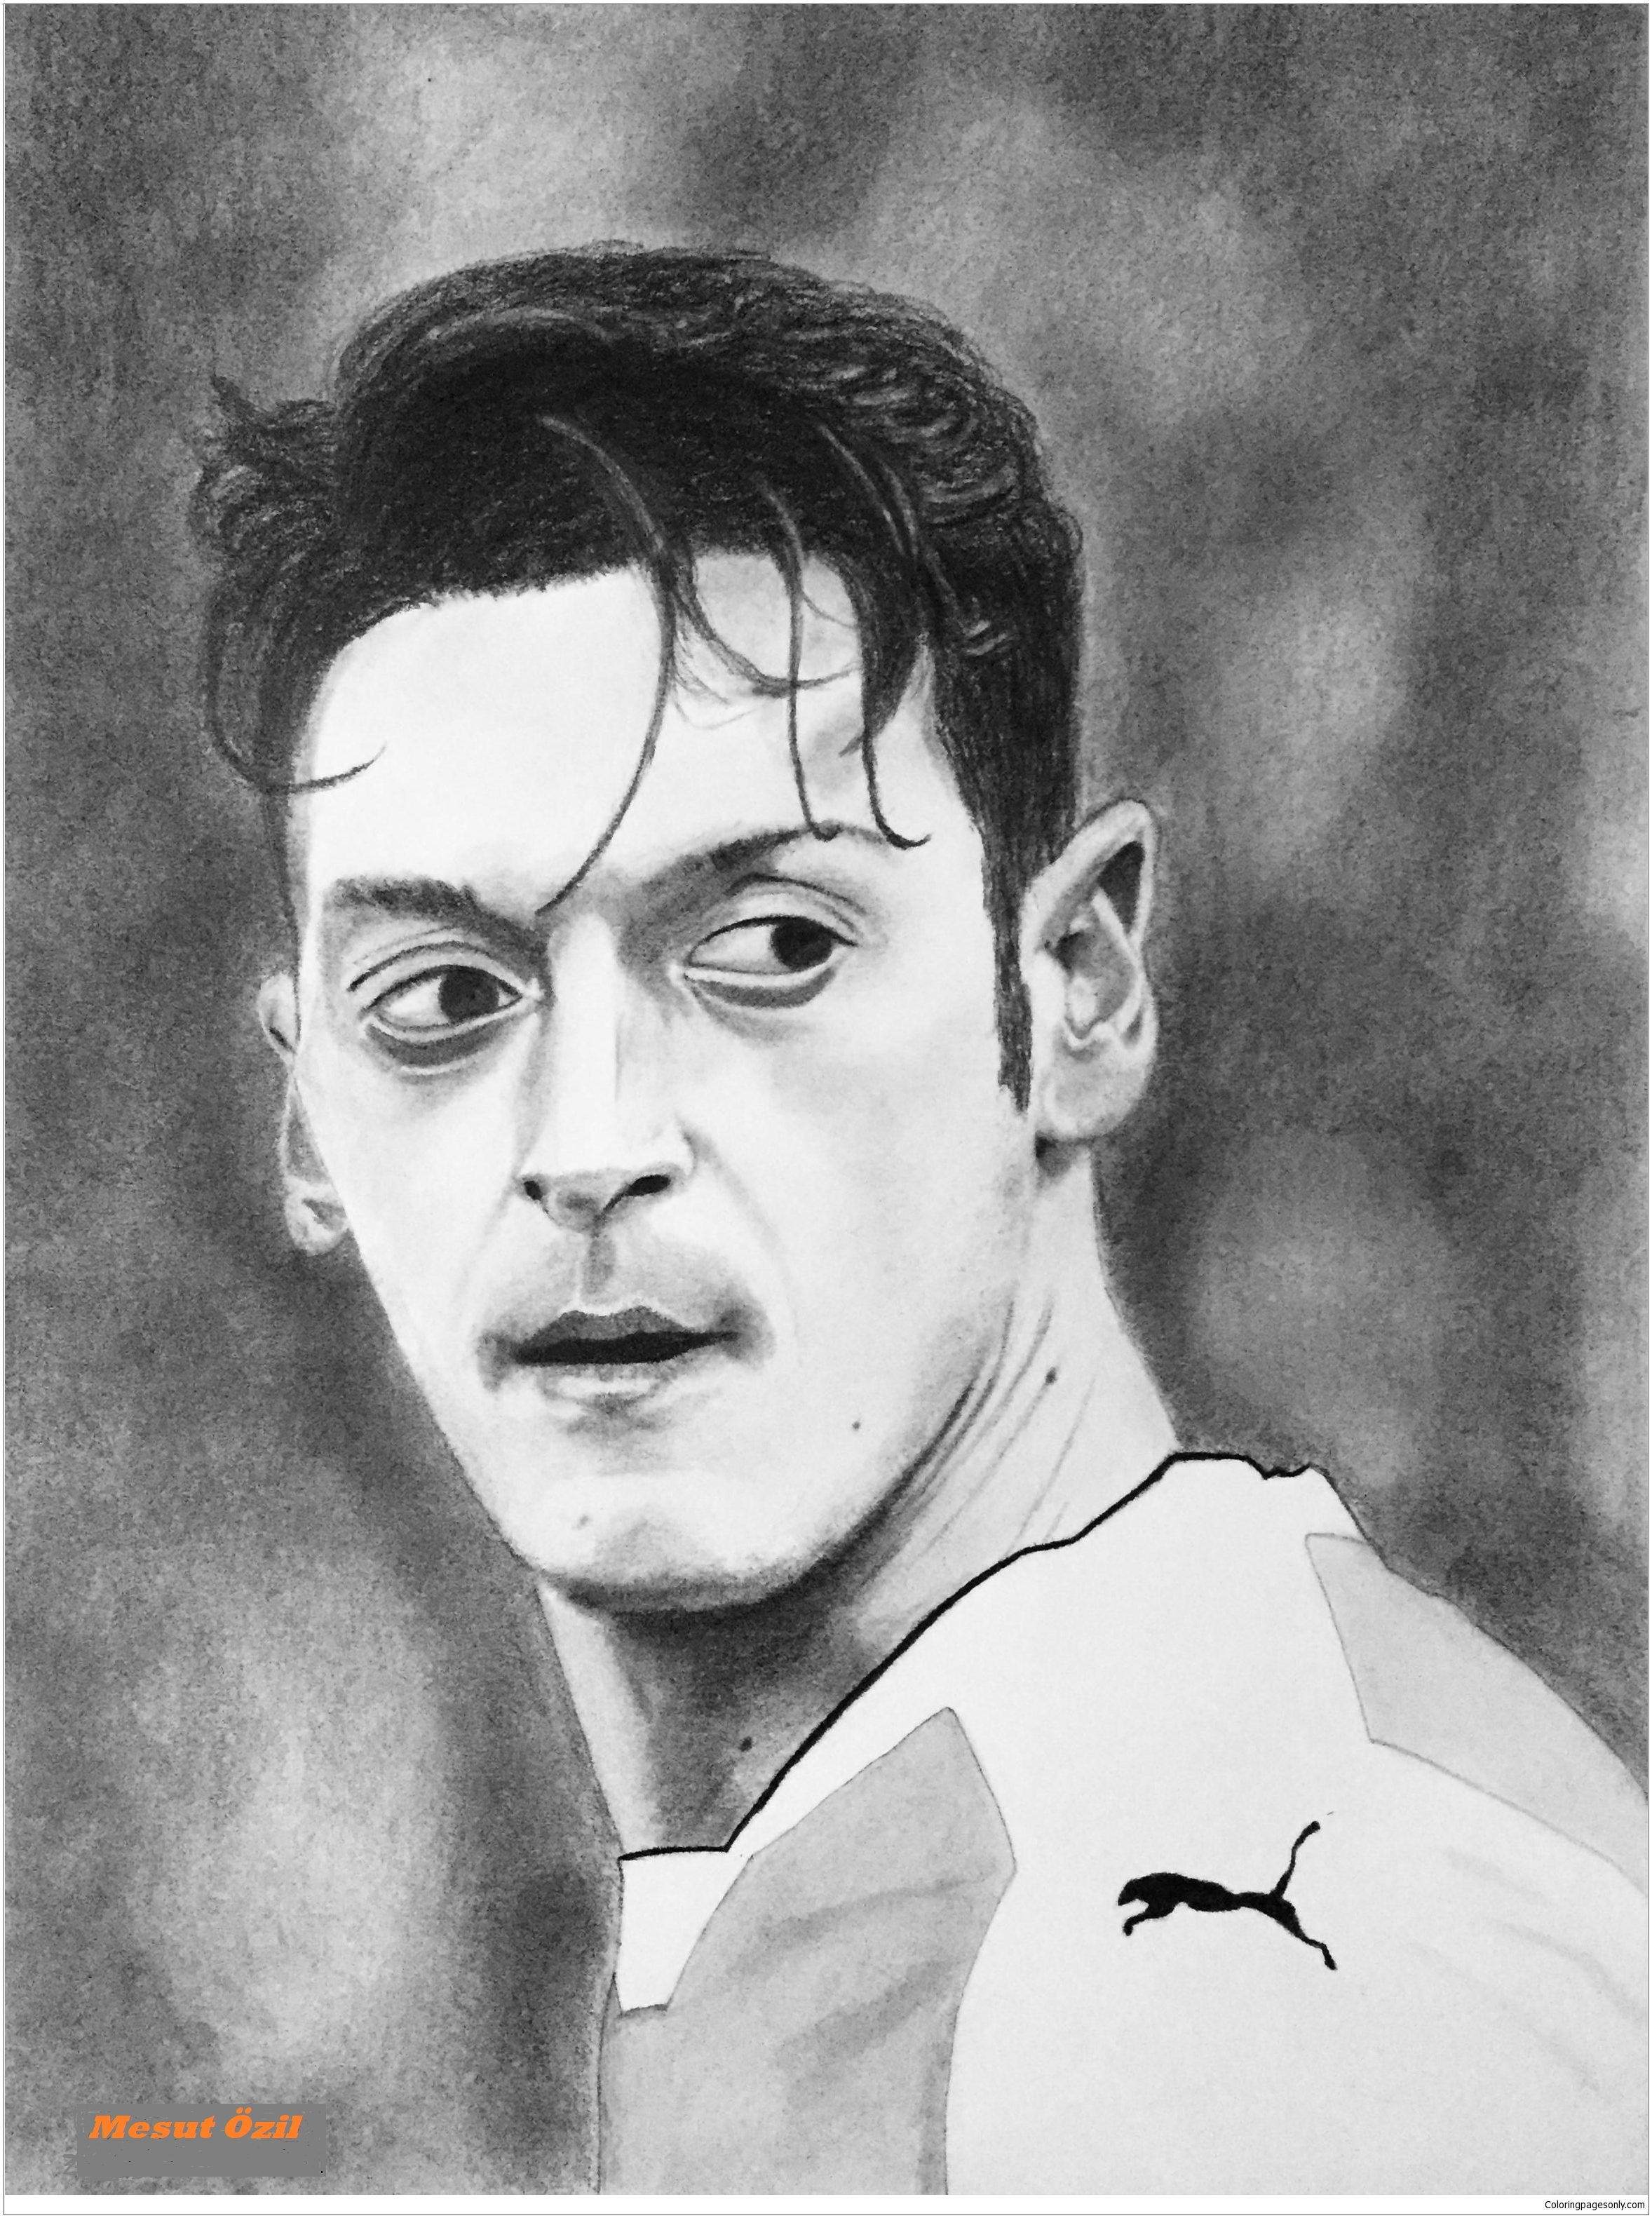 Mesut Özil-immagine 2 da Mesut Özil